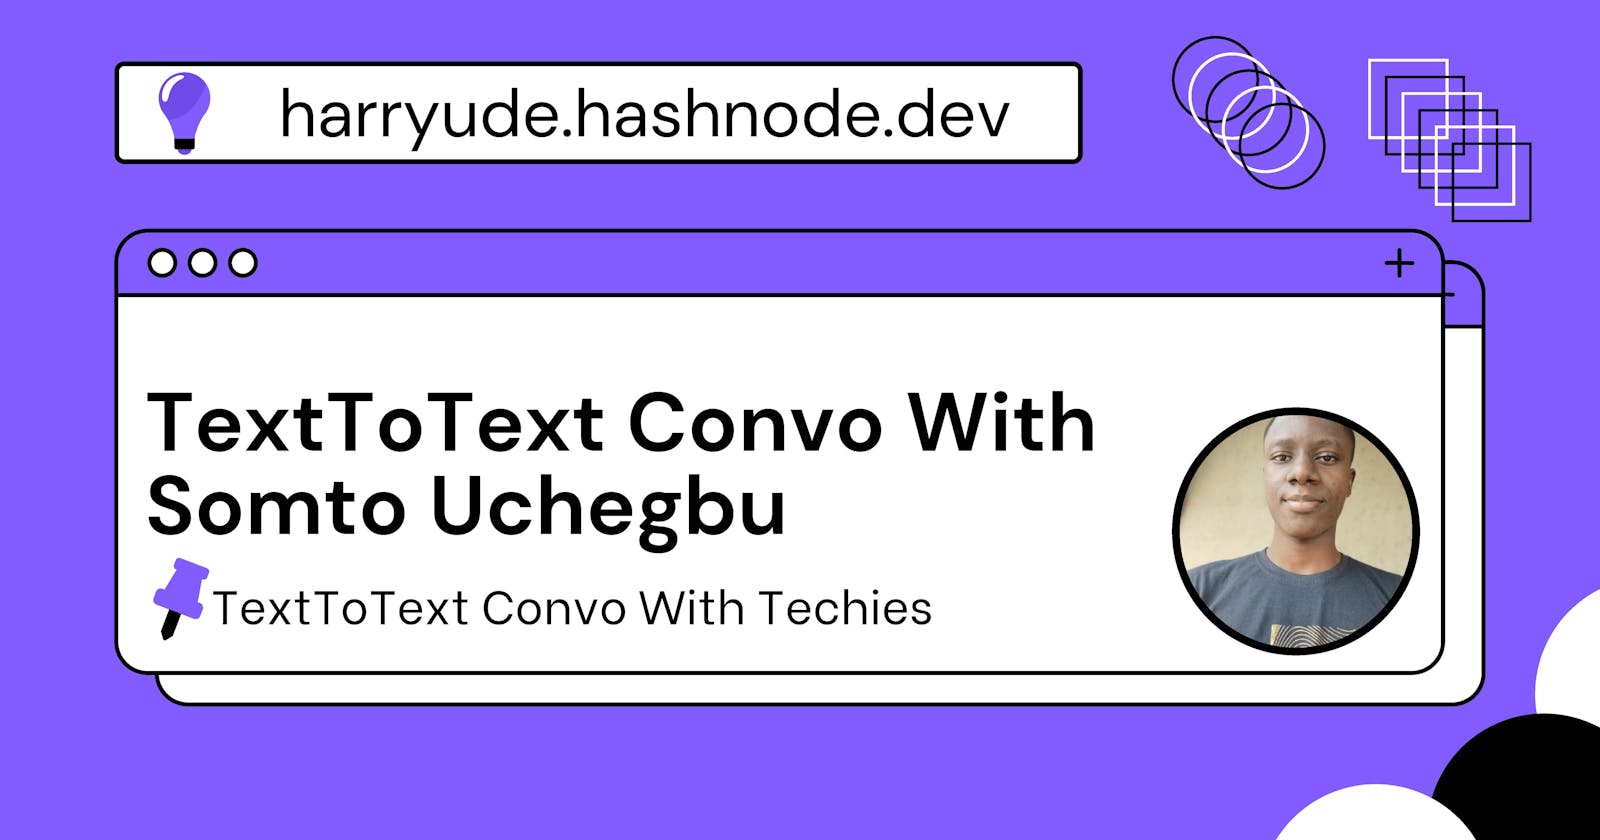 TextToText Convo With Somto Uchegbu